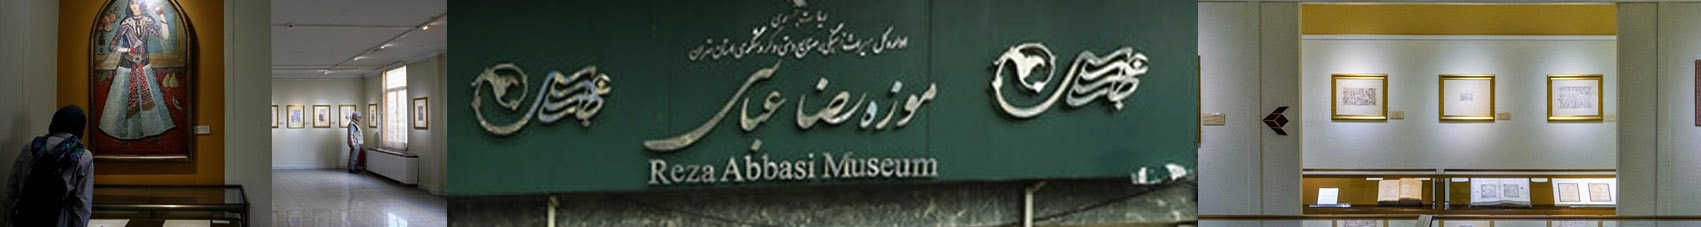 museo reza abbasi (2)